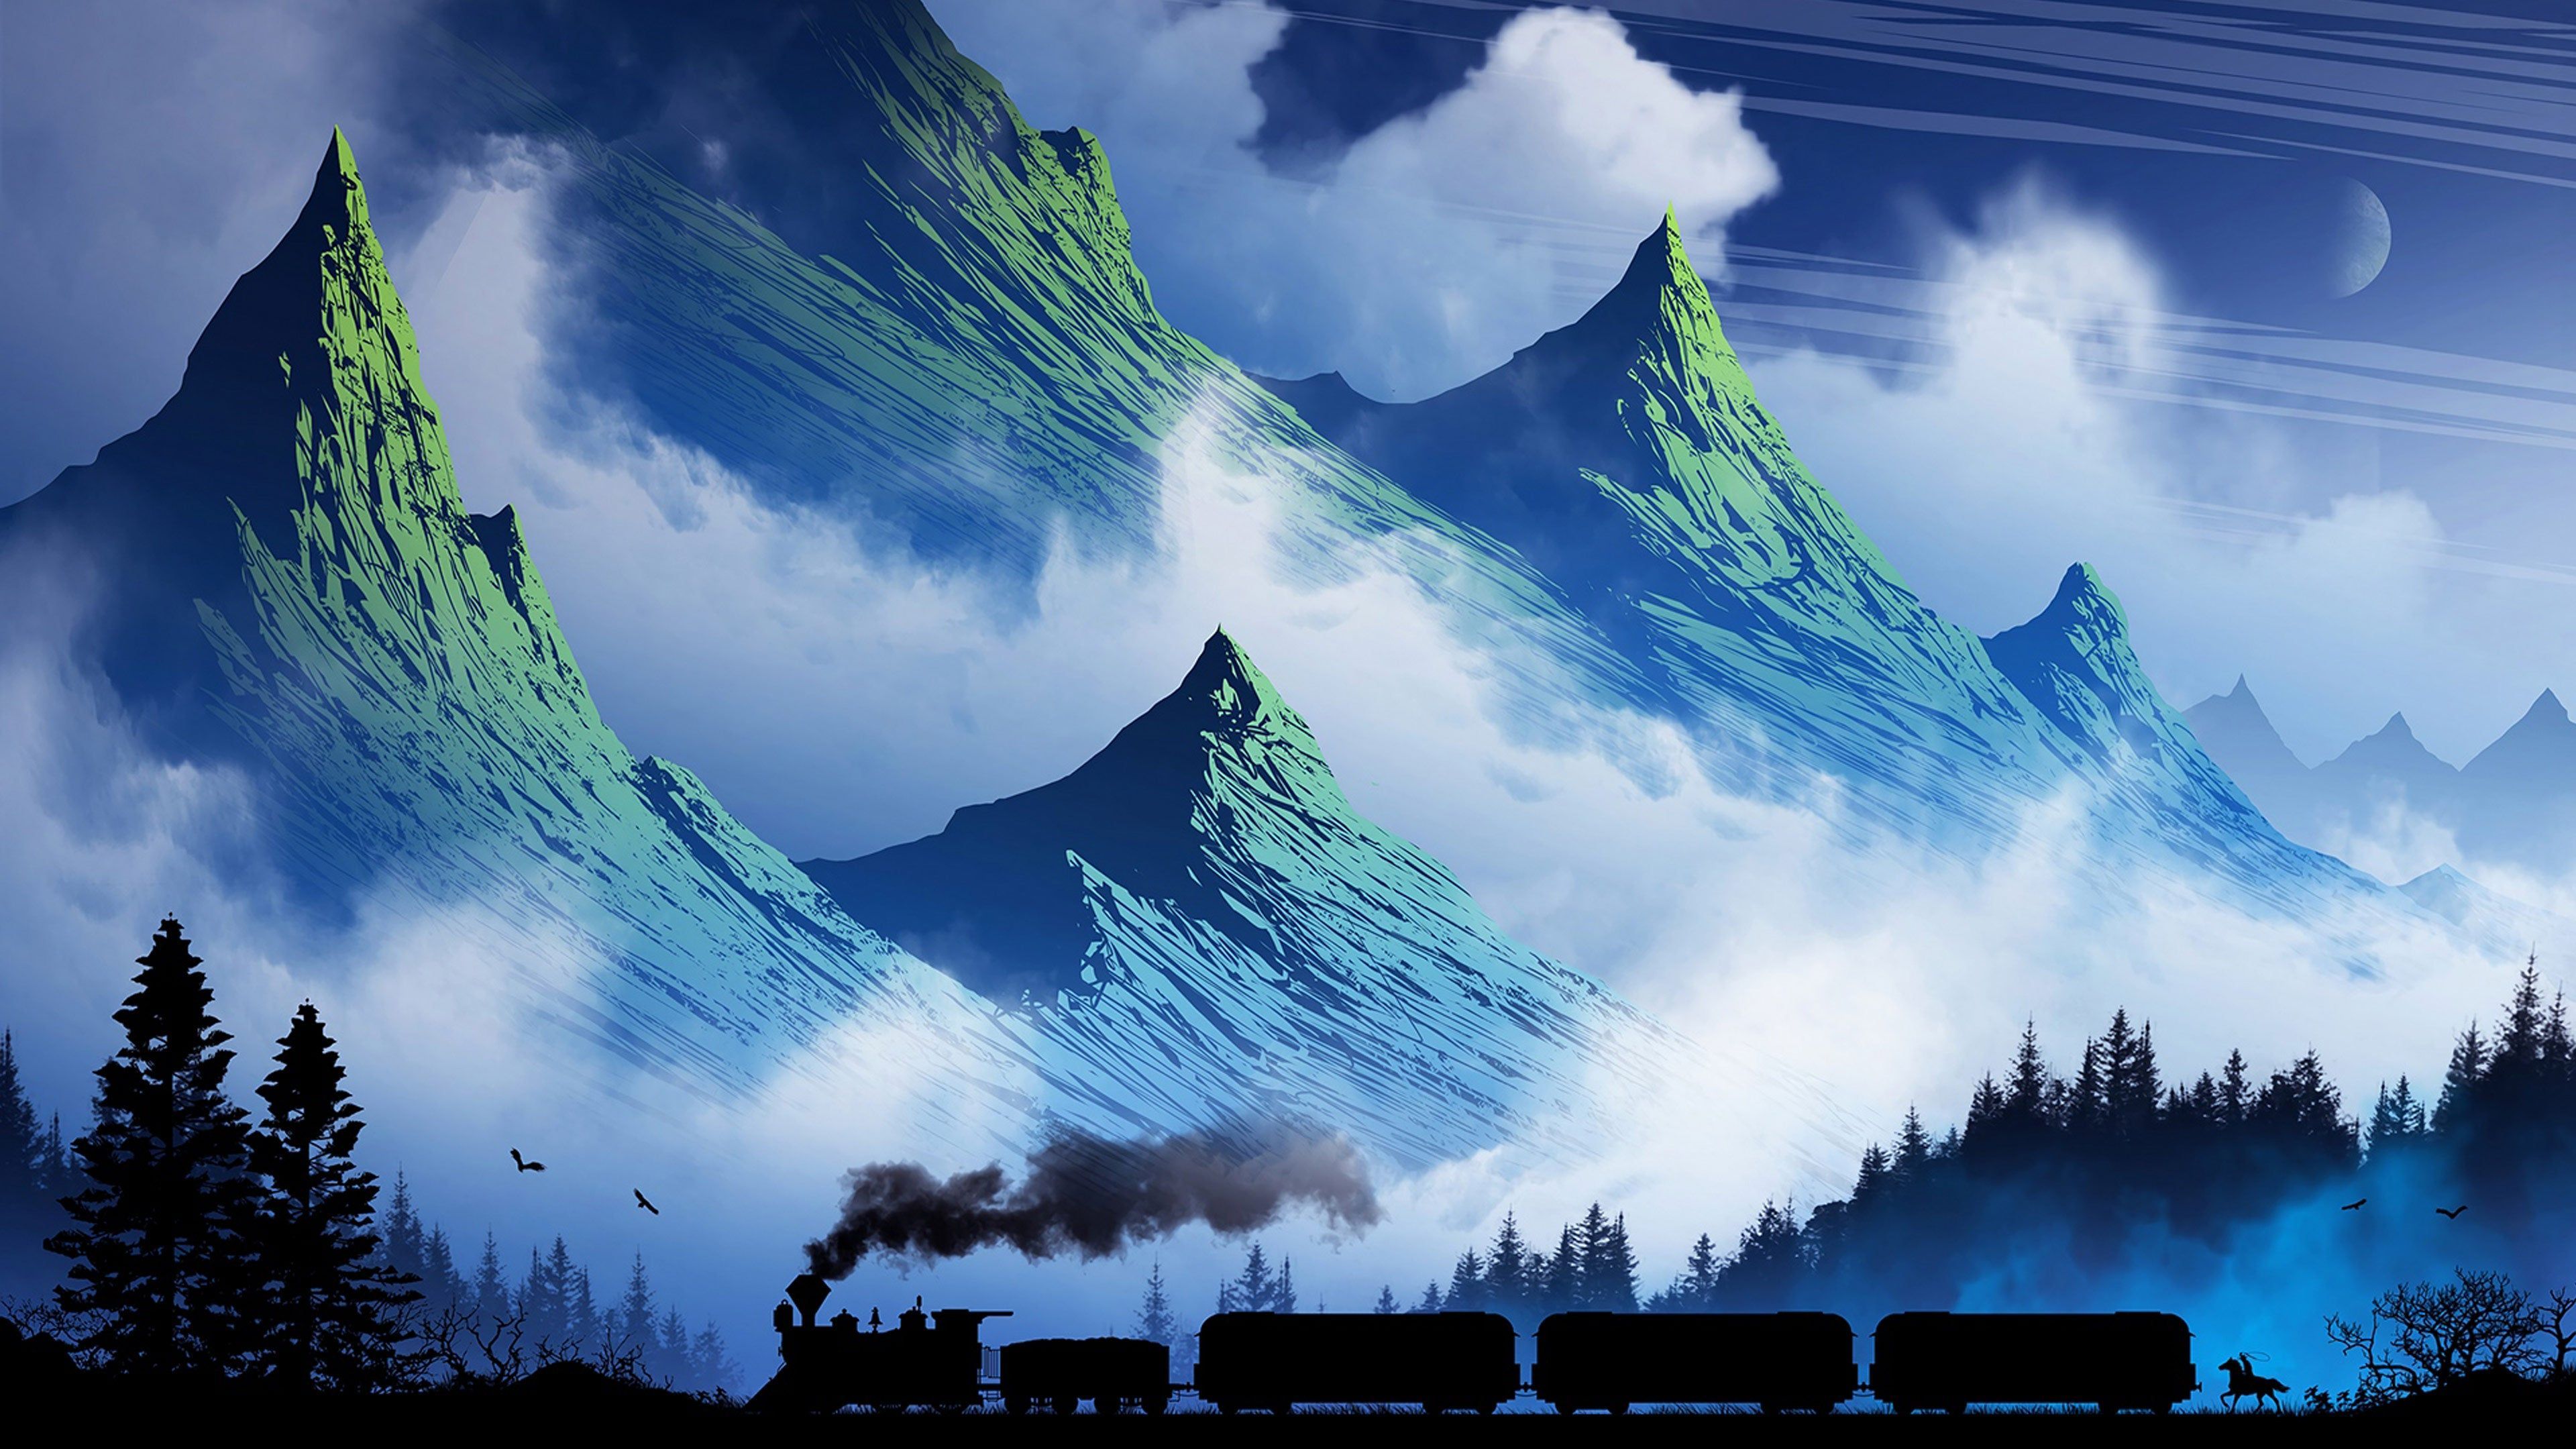 Mountain and Train Art 4K wallpaper